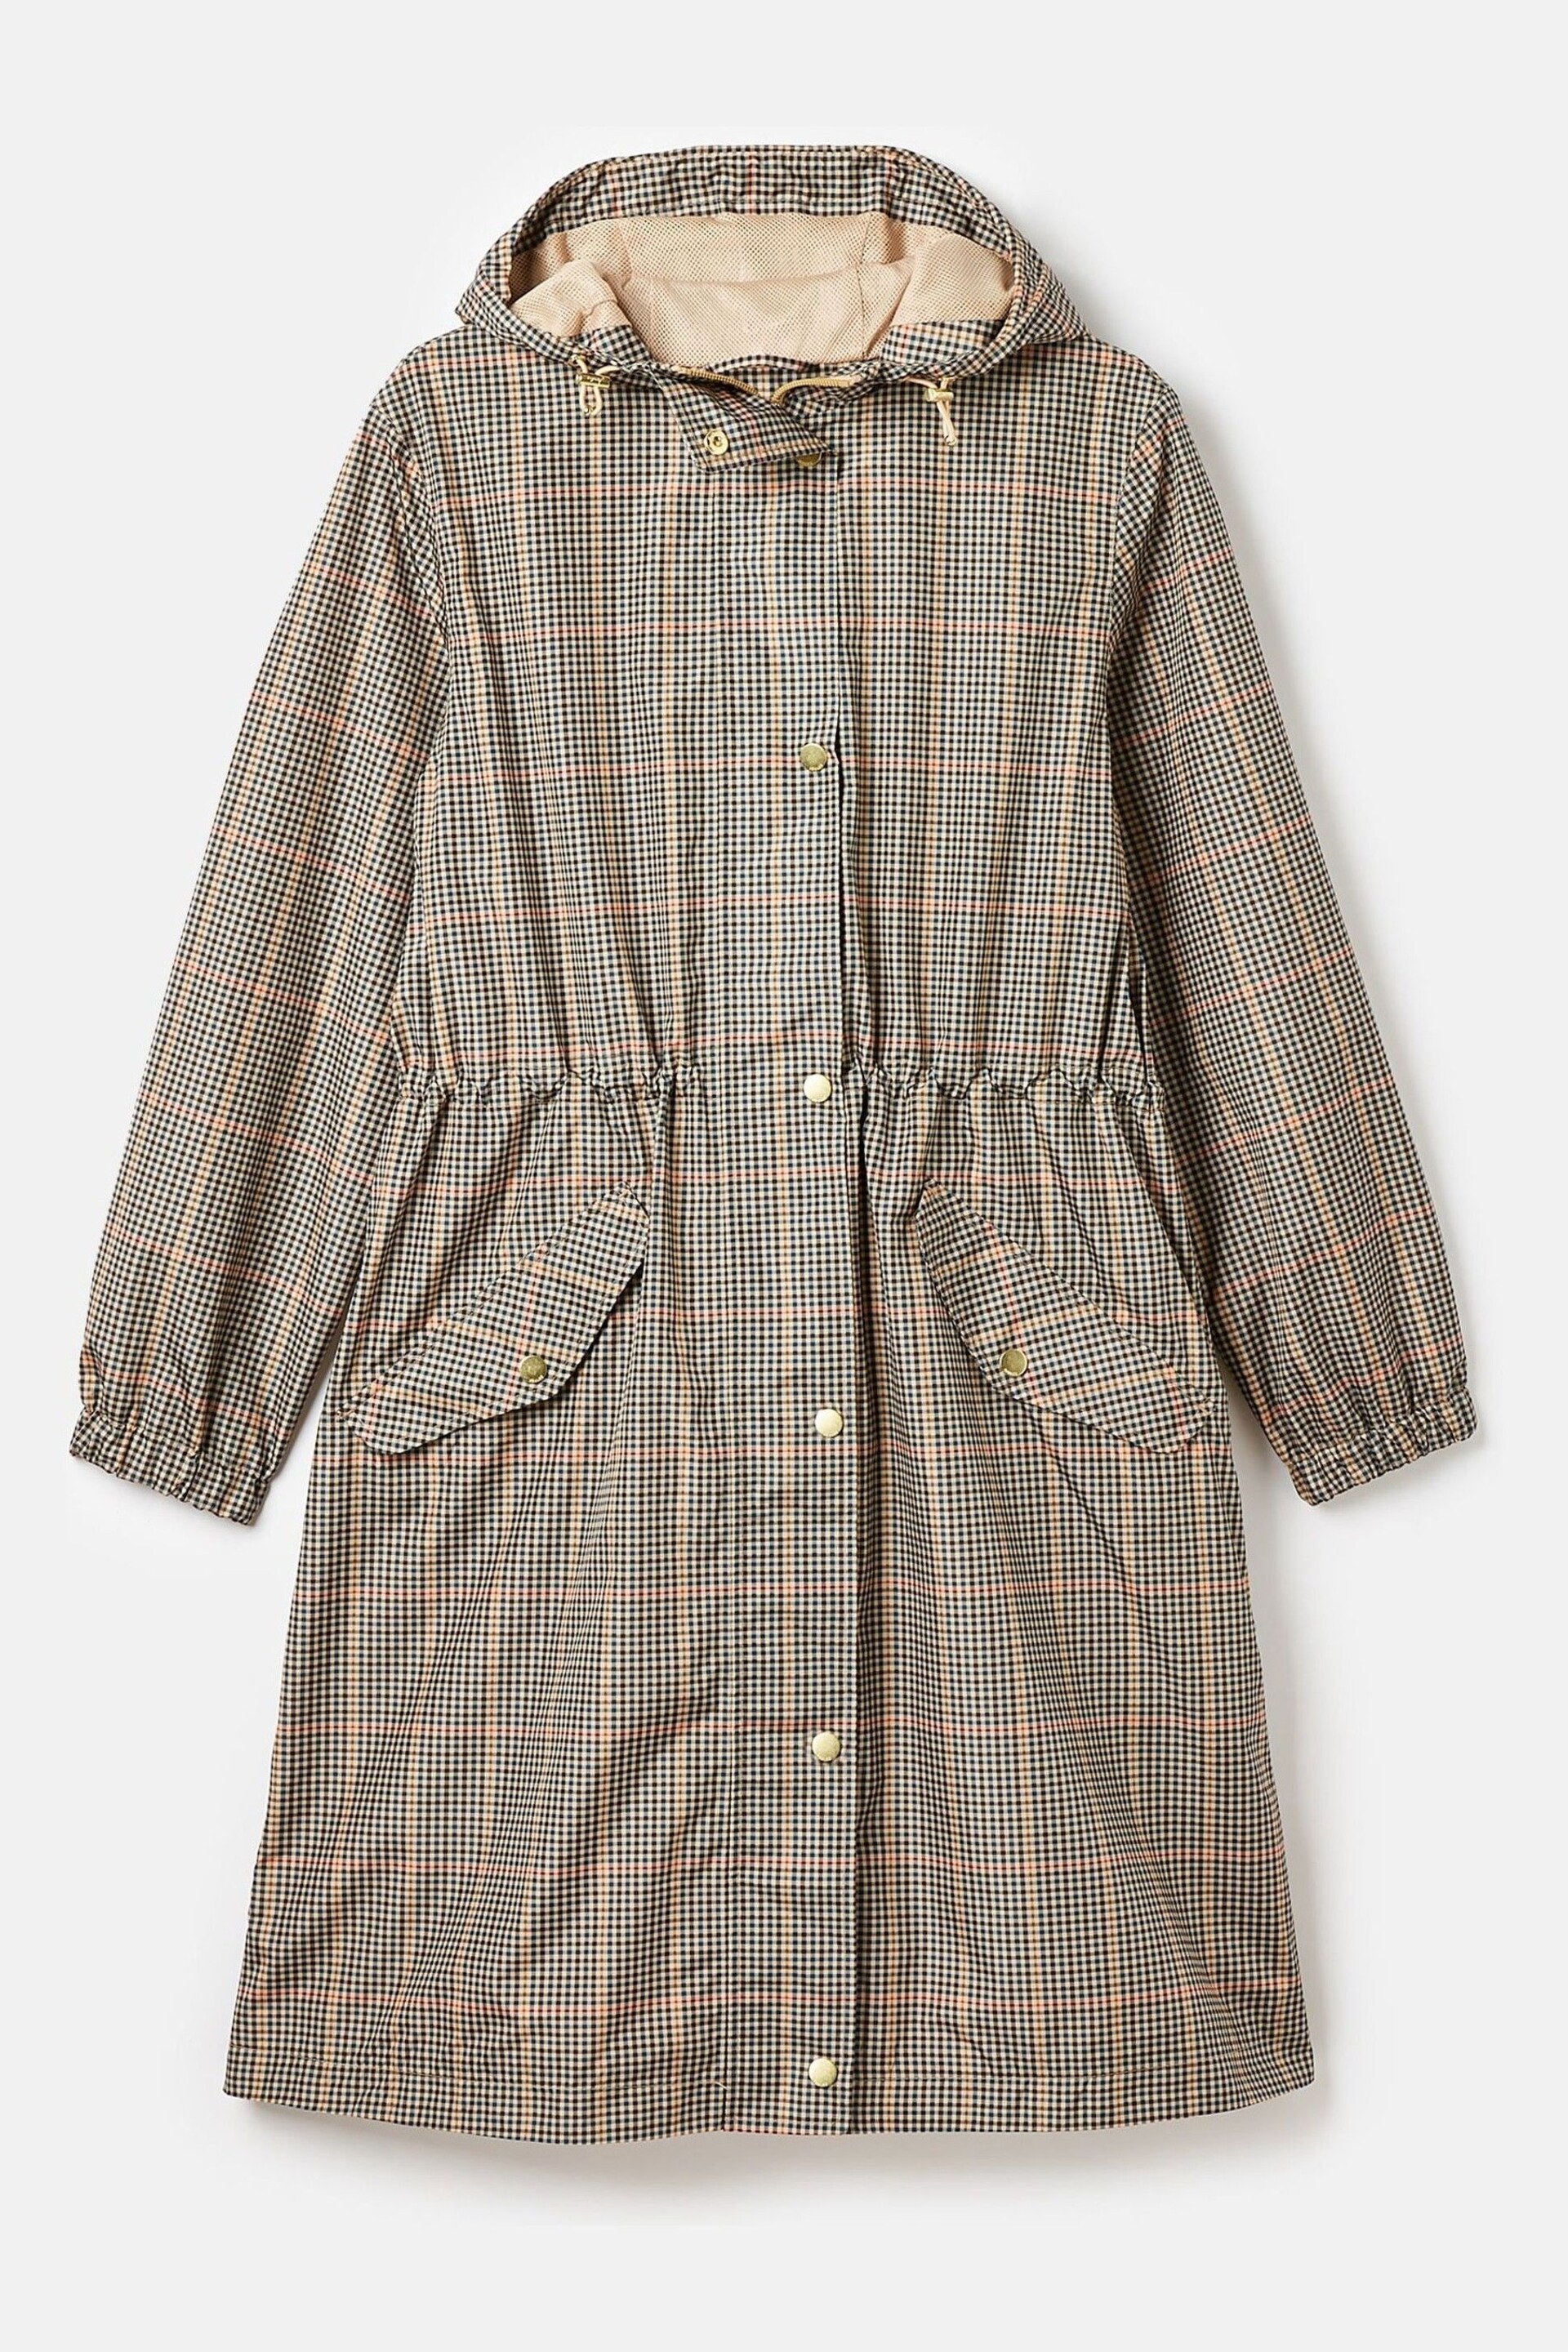 Joules Holkham Brown Waterproof Packable Raincoat With Hood - Image 9 of 14